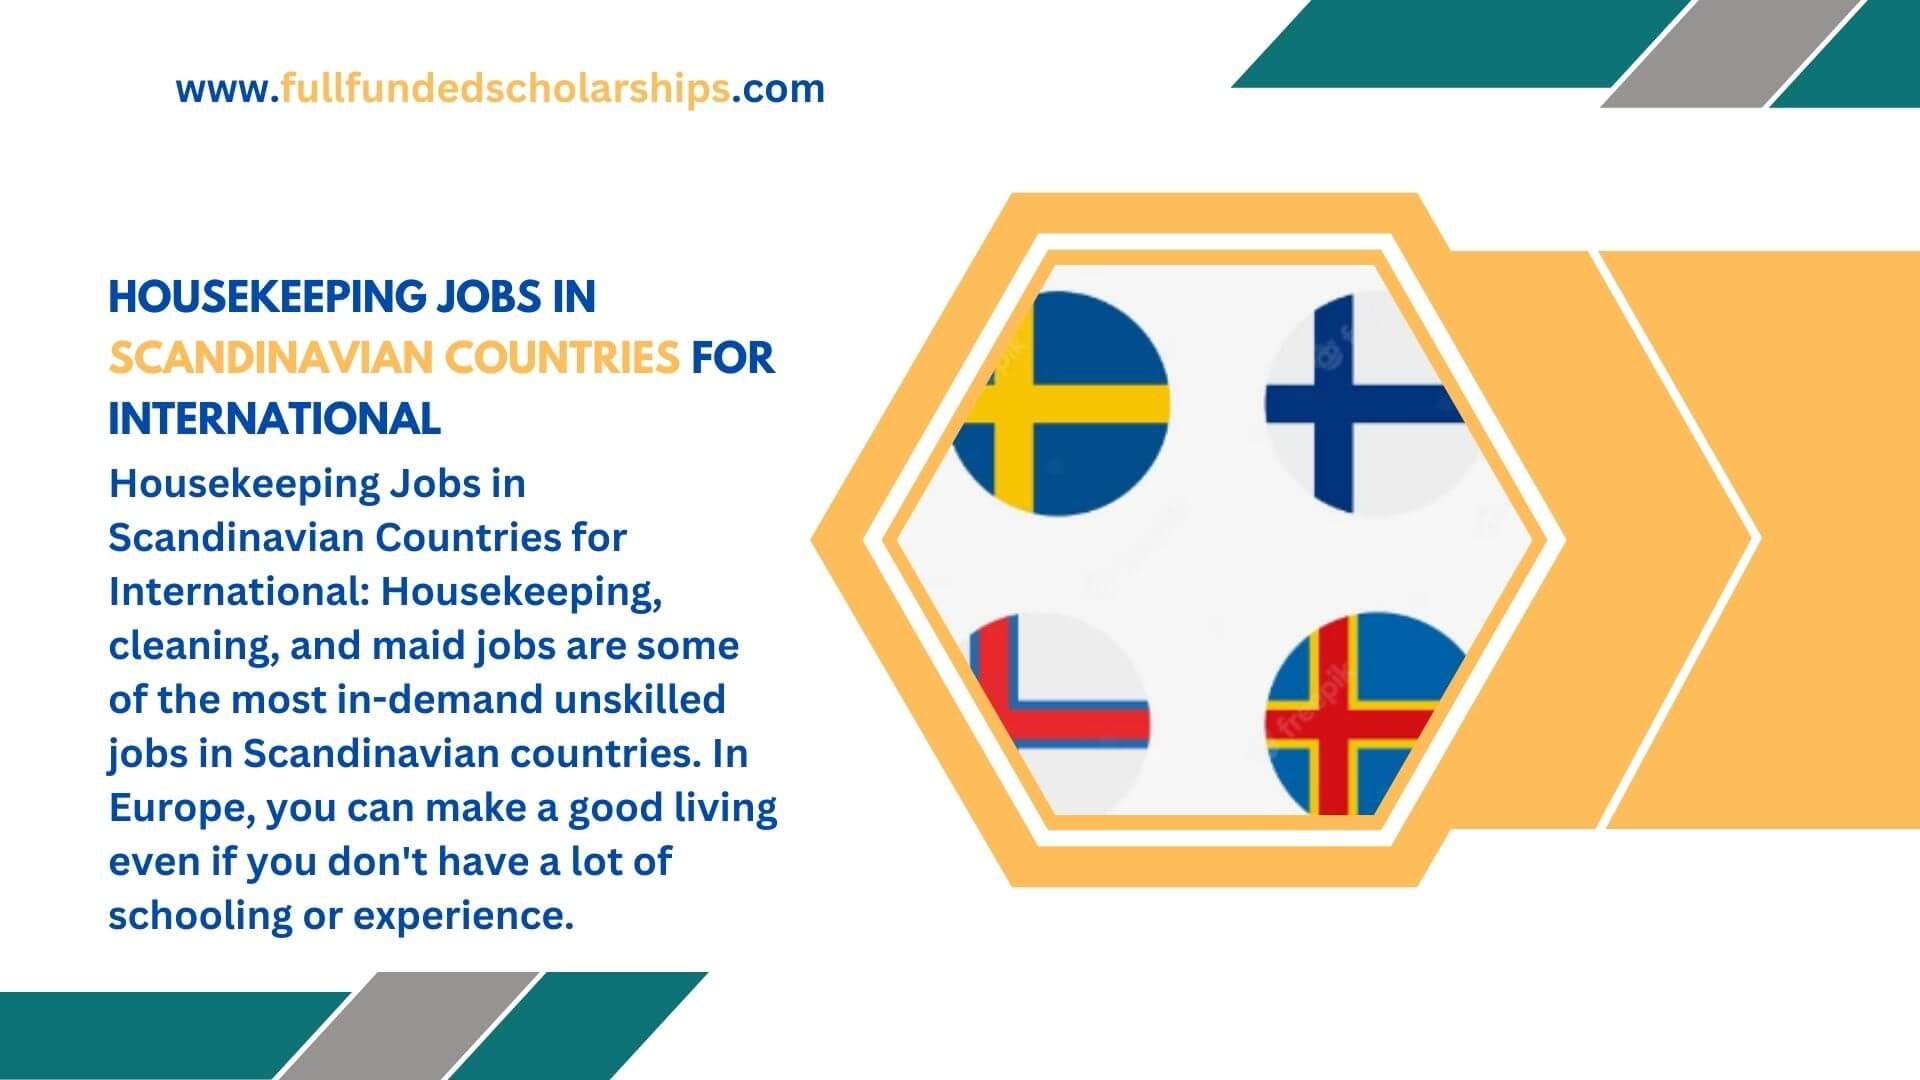 Housekeeping Jobs in Scandinavian Countries for International